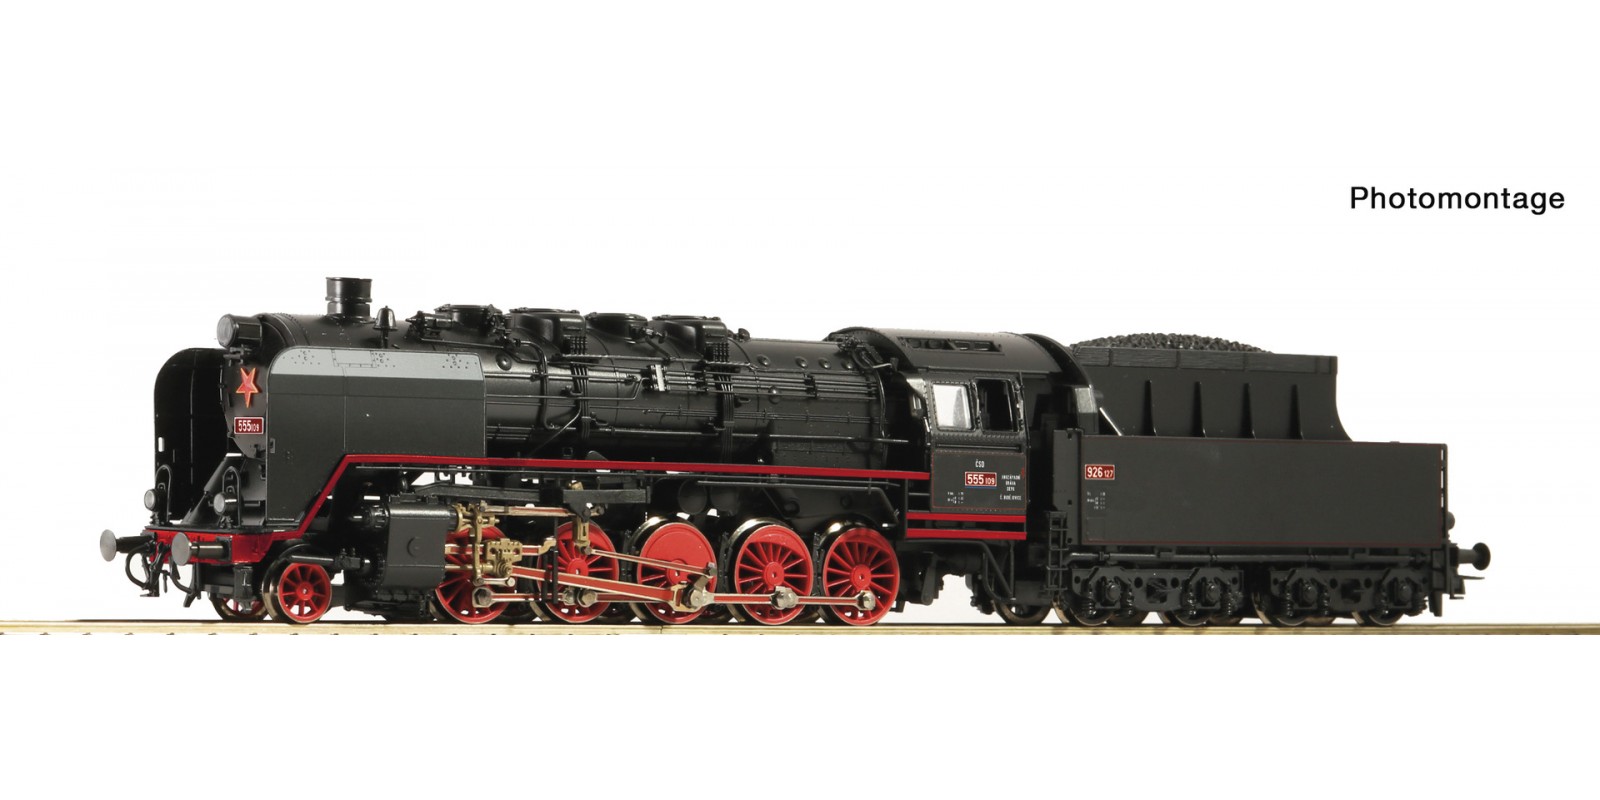 RO70273 Steam locomotive 555 109